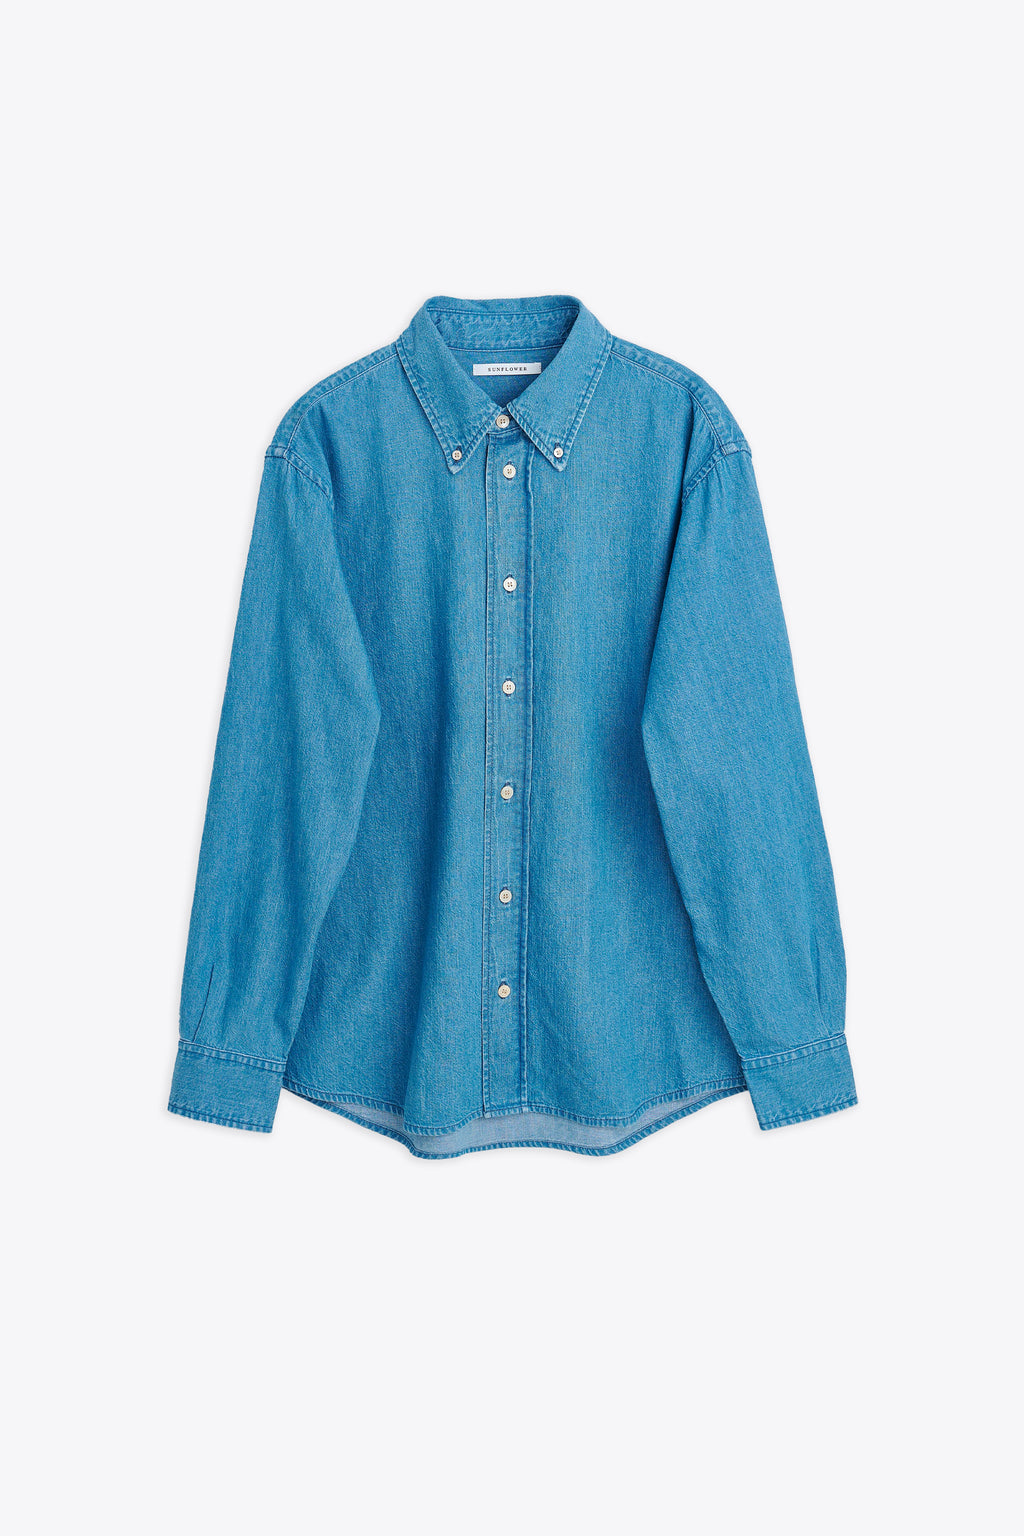 alt-image__Mid-blue-chambray-denim-shirt-with-long-sleeves---Denim-Button-Down-Shirt